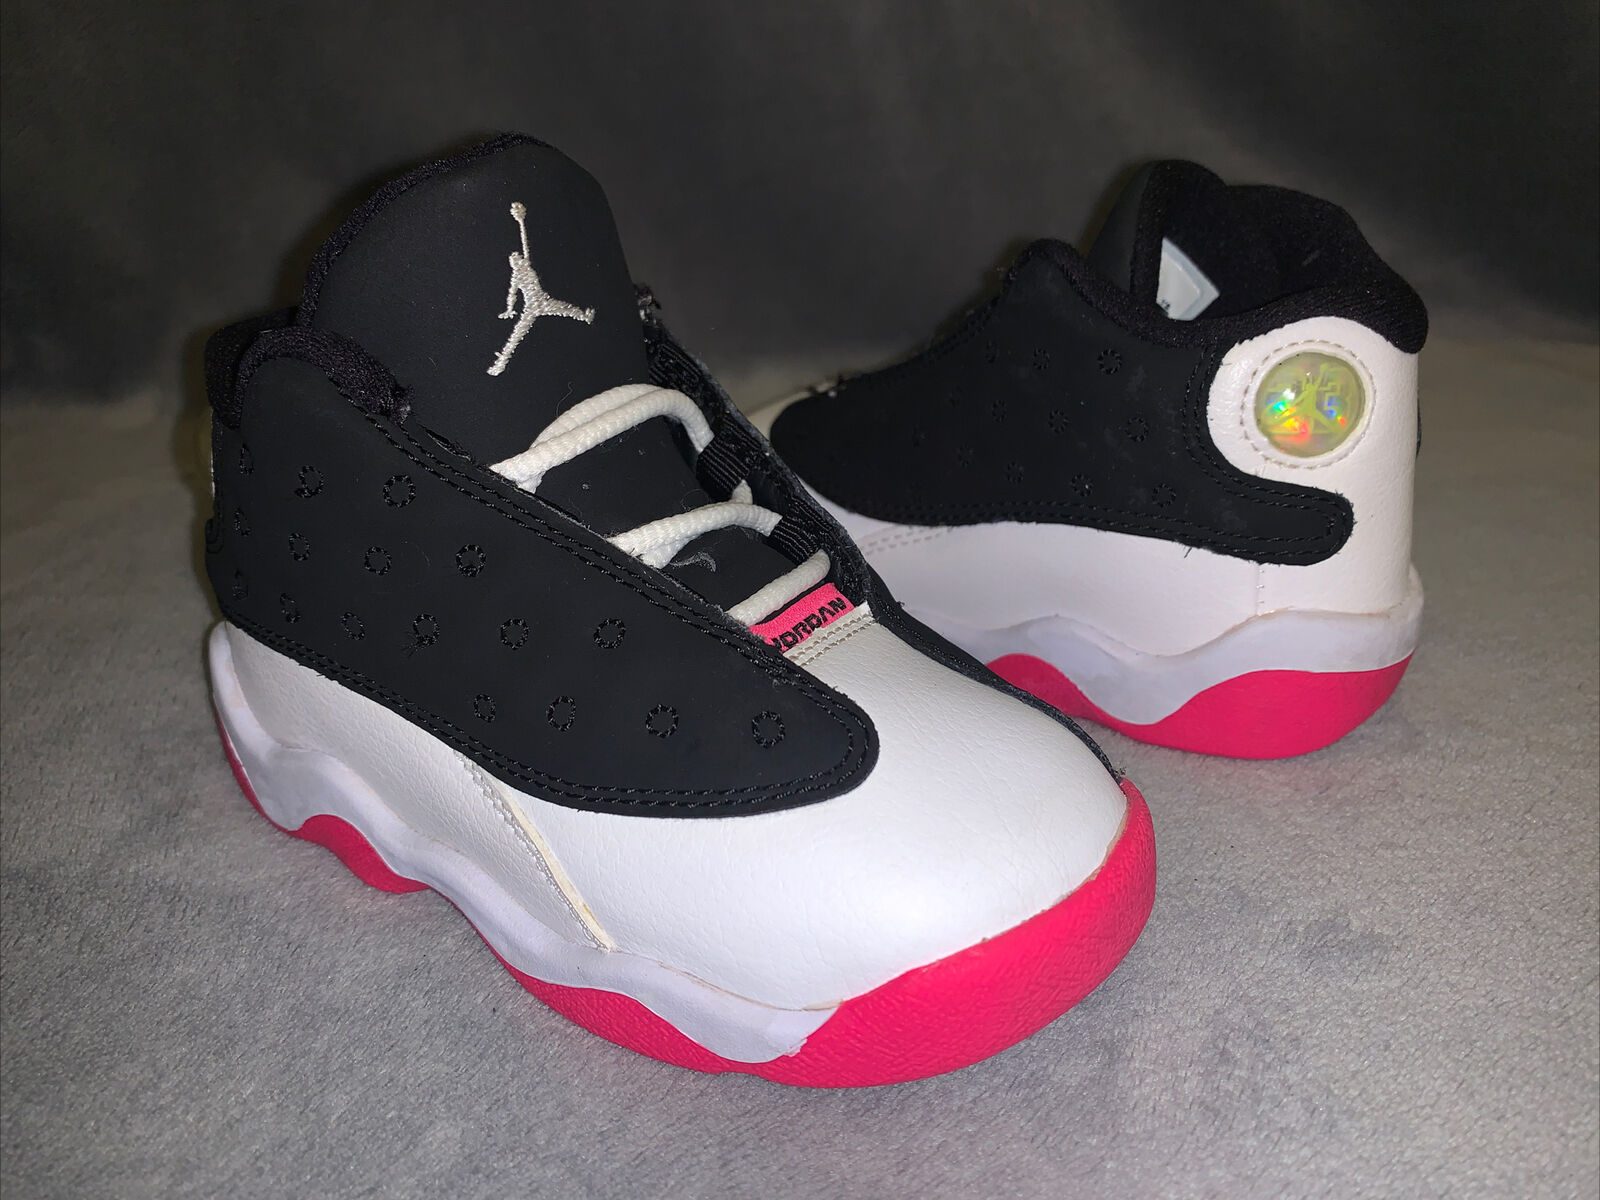 Toddler Girl’s Air Jordan 13 Retro Basketball Shoes 'Hyper Pink' 2014 - Size 7C